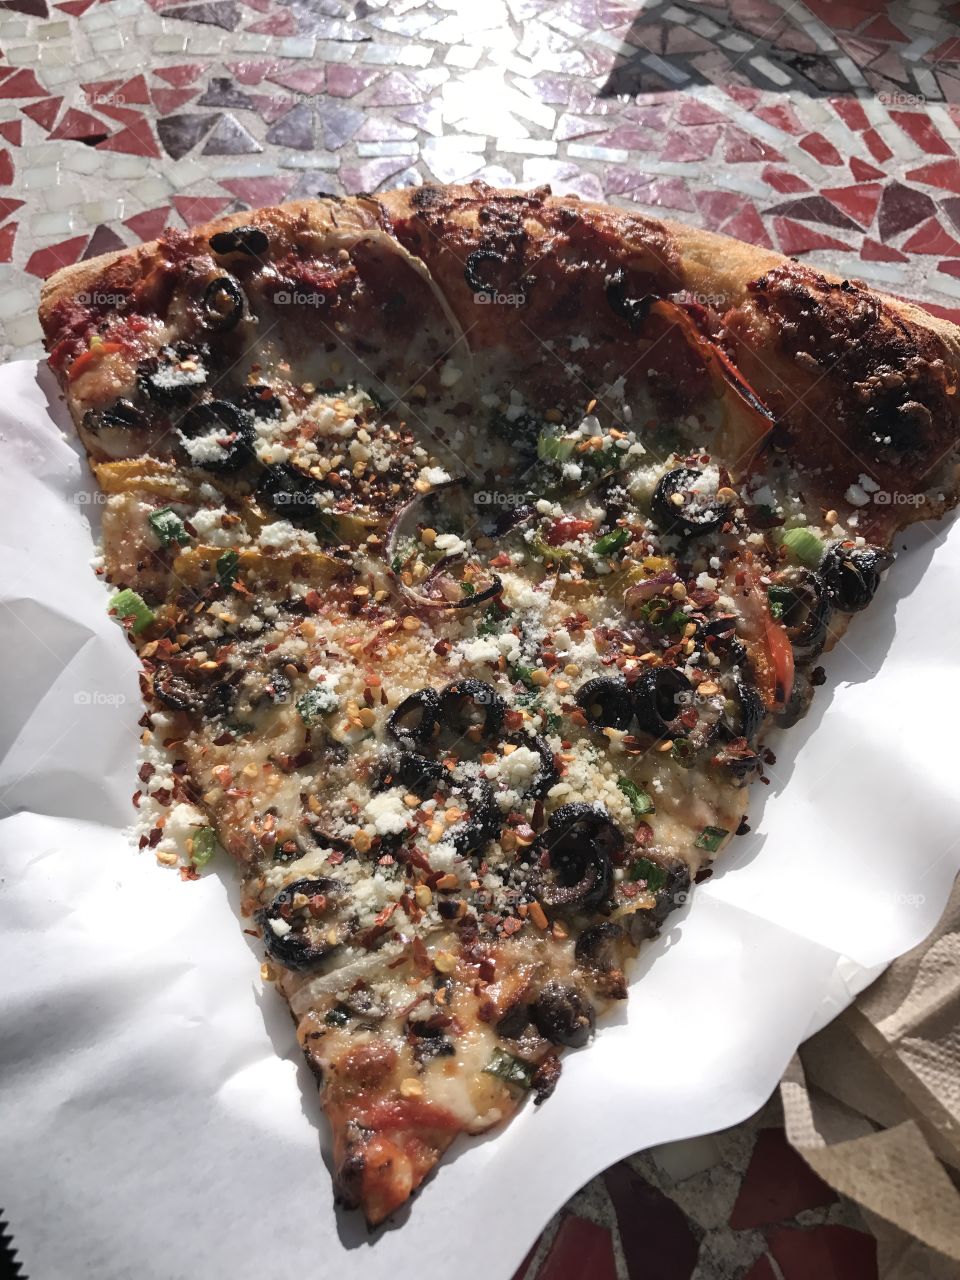 Tony's Pizza by the slice in North Beach, San Francisco